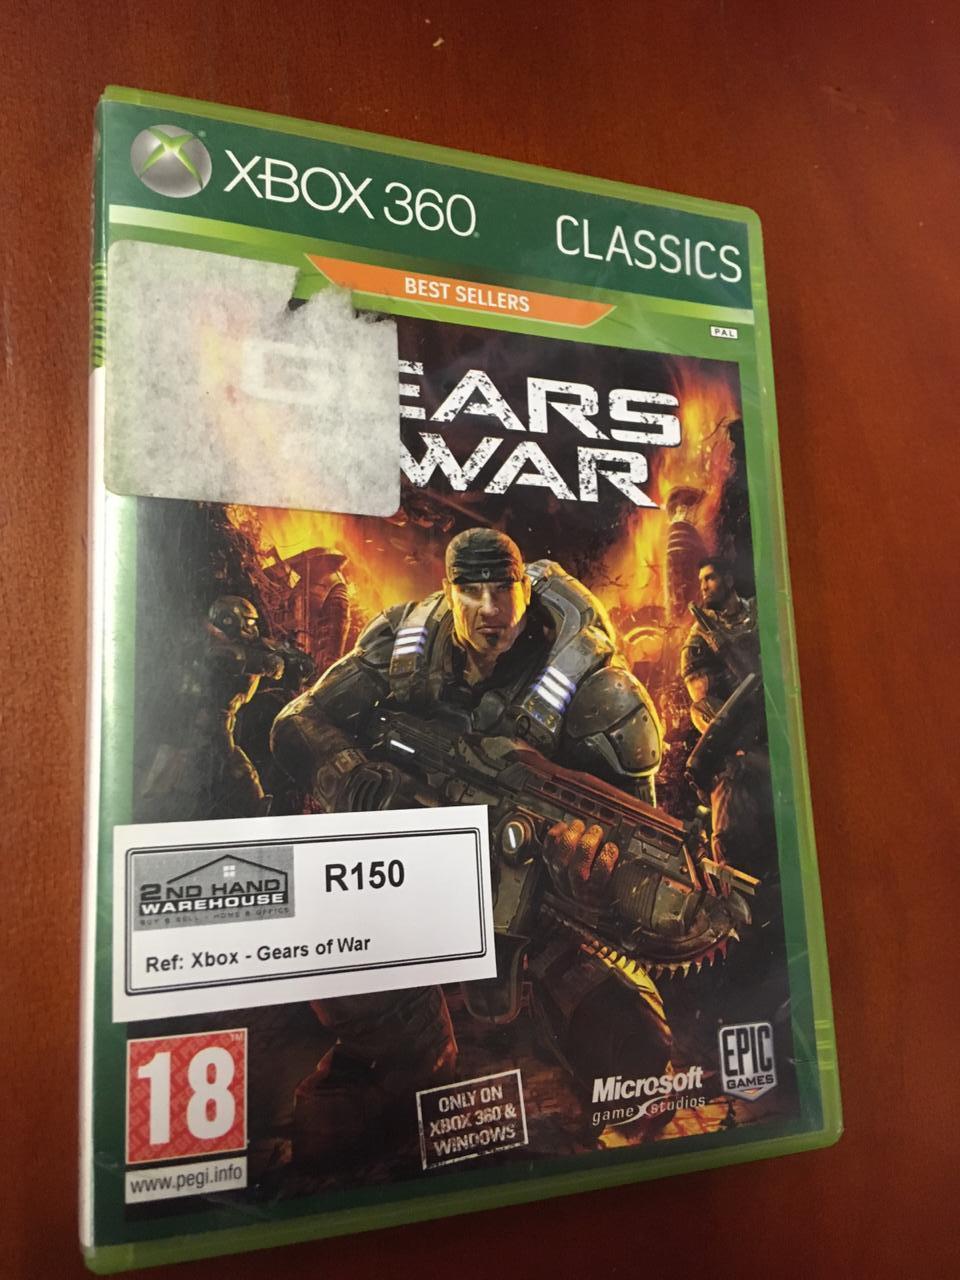 Xbox-Gears Of War - 2ndhandwarehouse.com